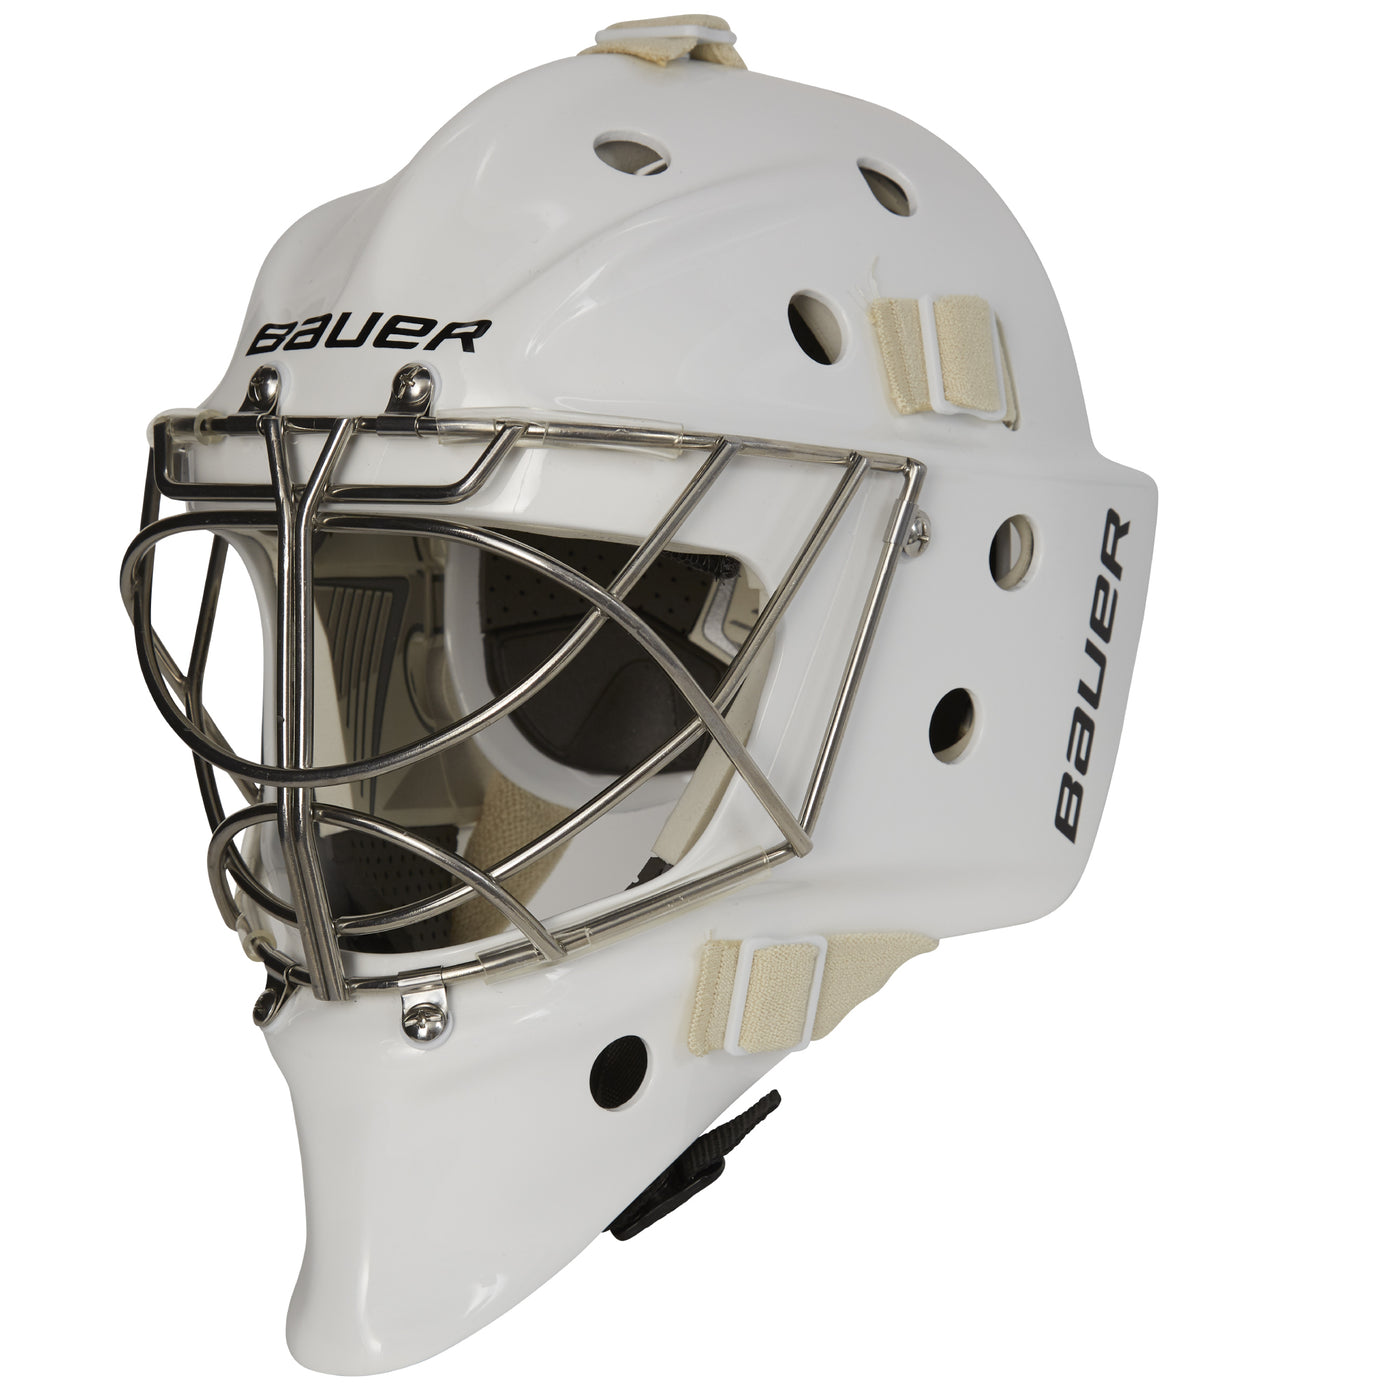 BAUER 960 Goalie Mask - SR (Cateye)